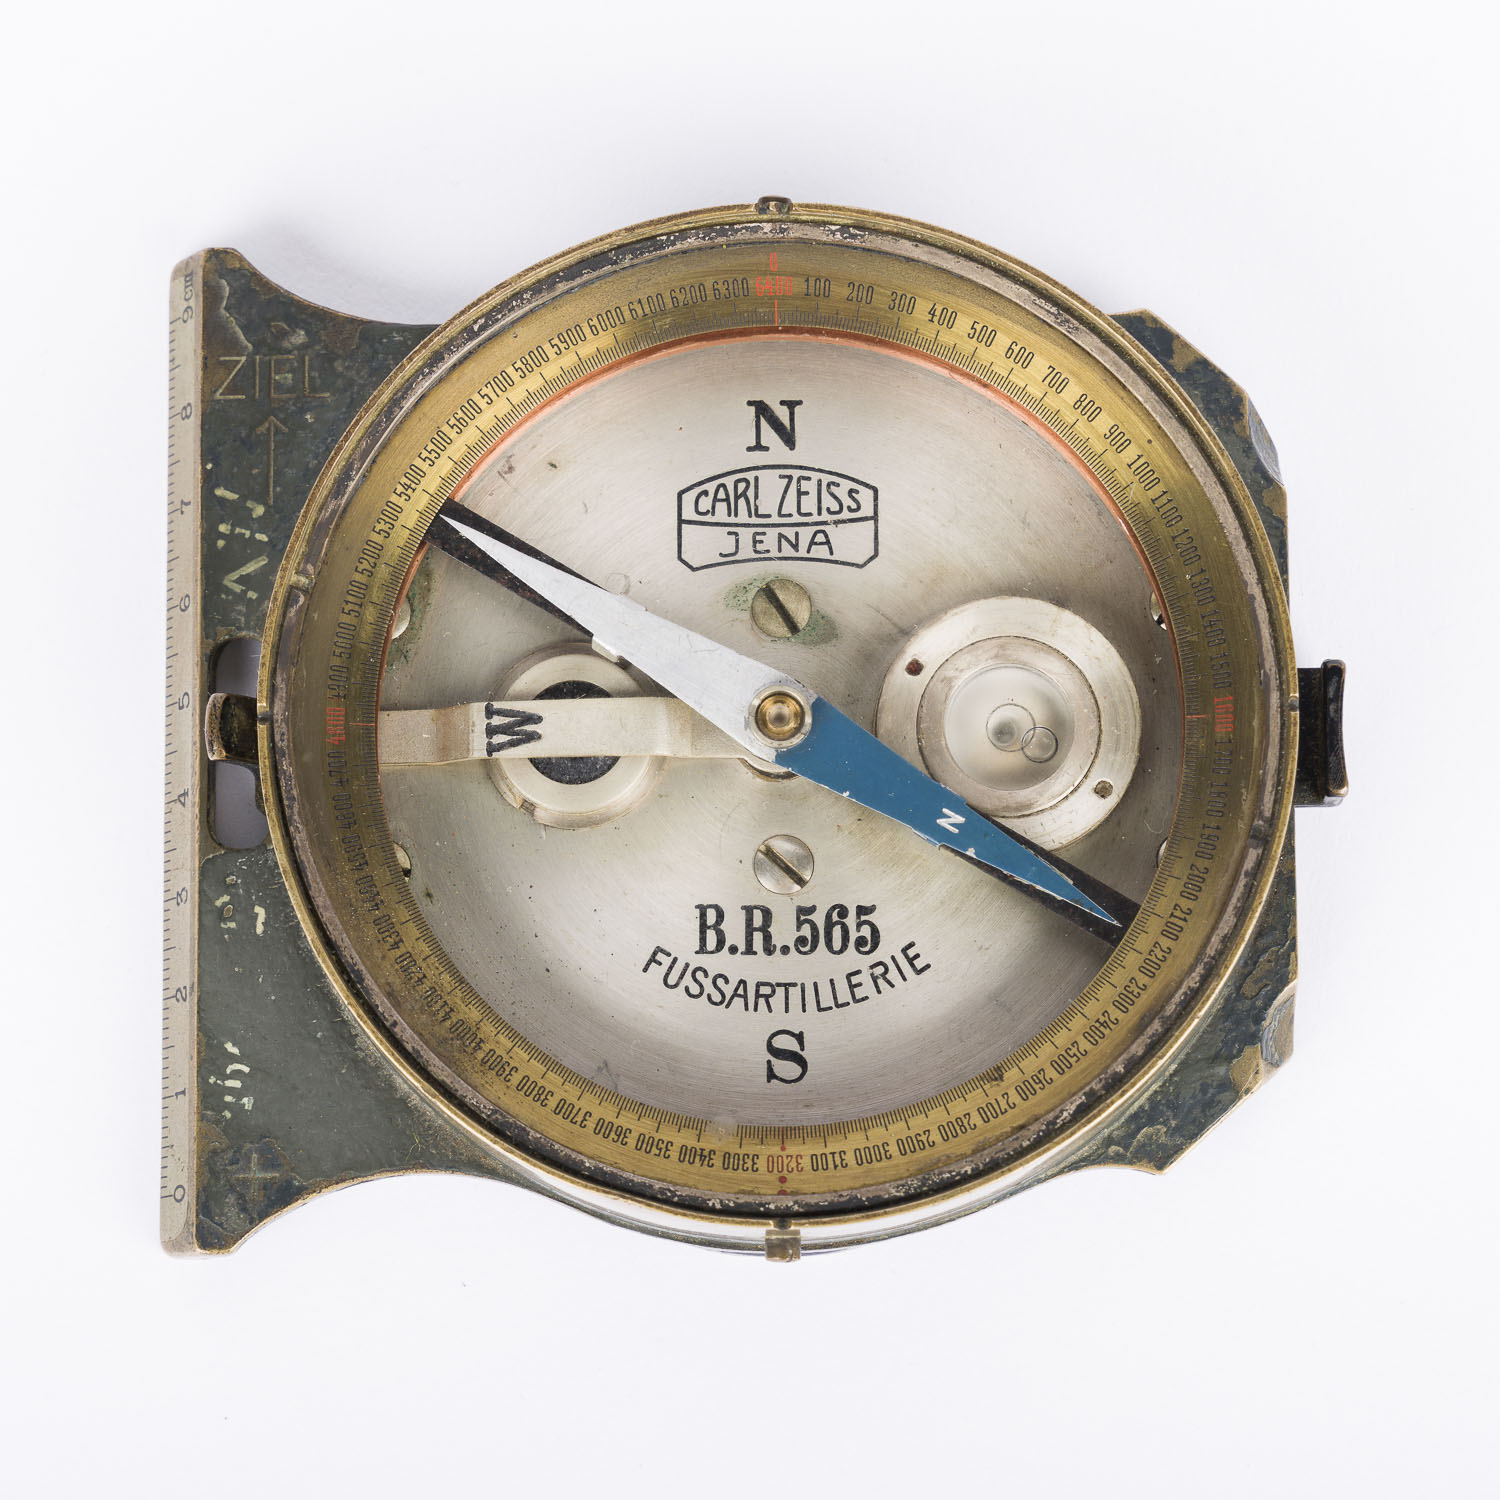 WWI Carl Zeiss Jena Fussartillerie compass